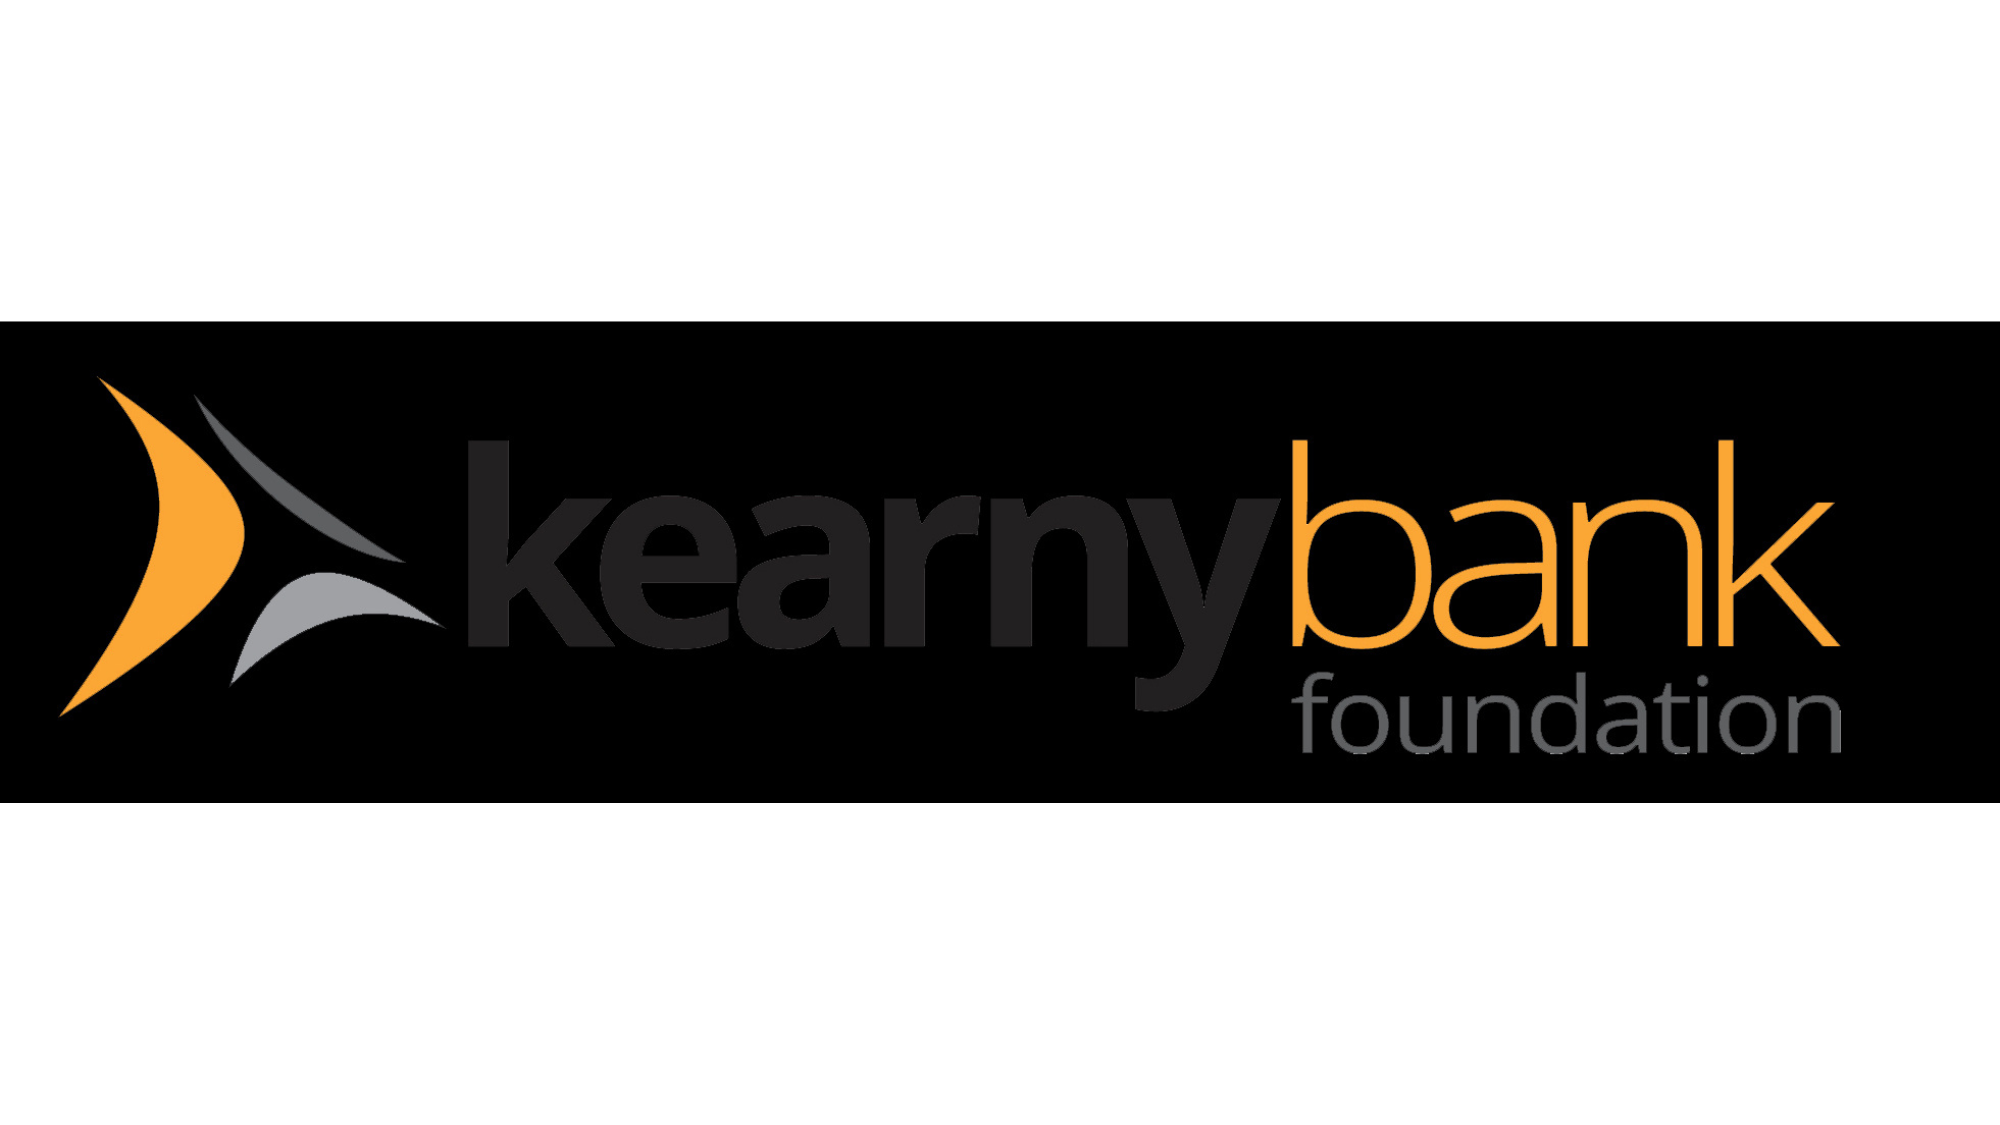 KearnyBank foundation logo